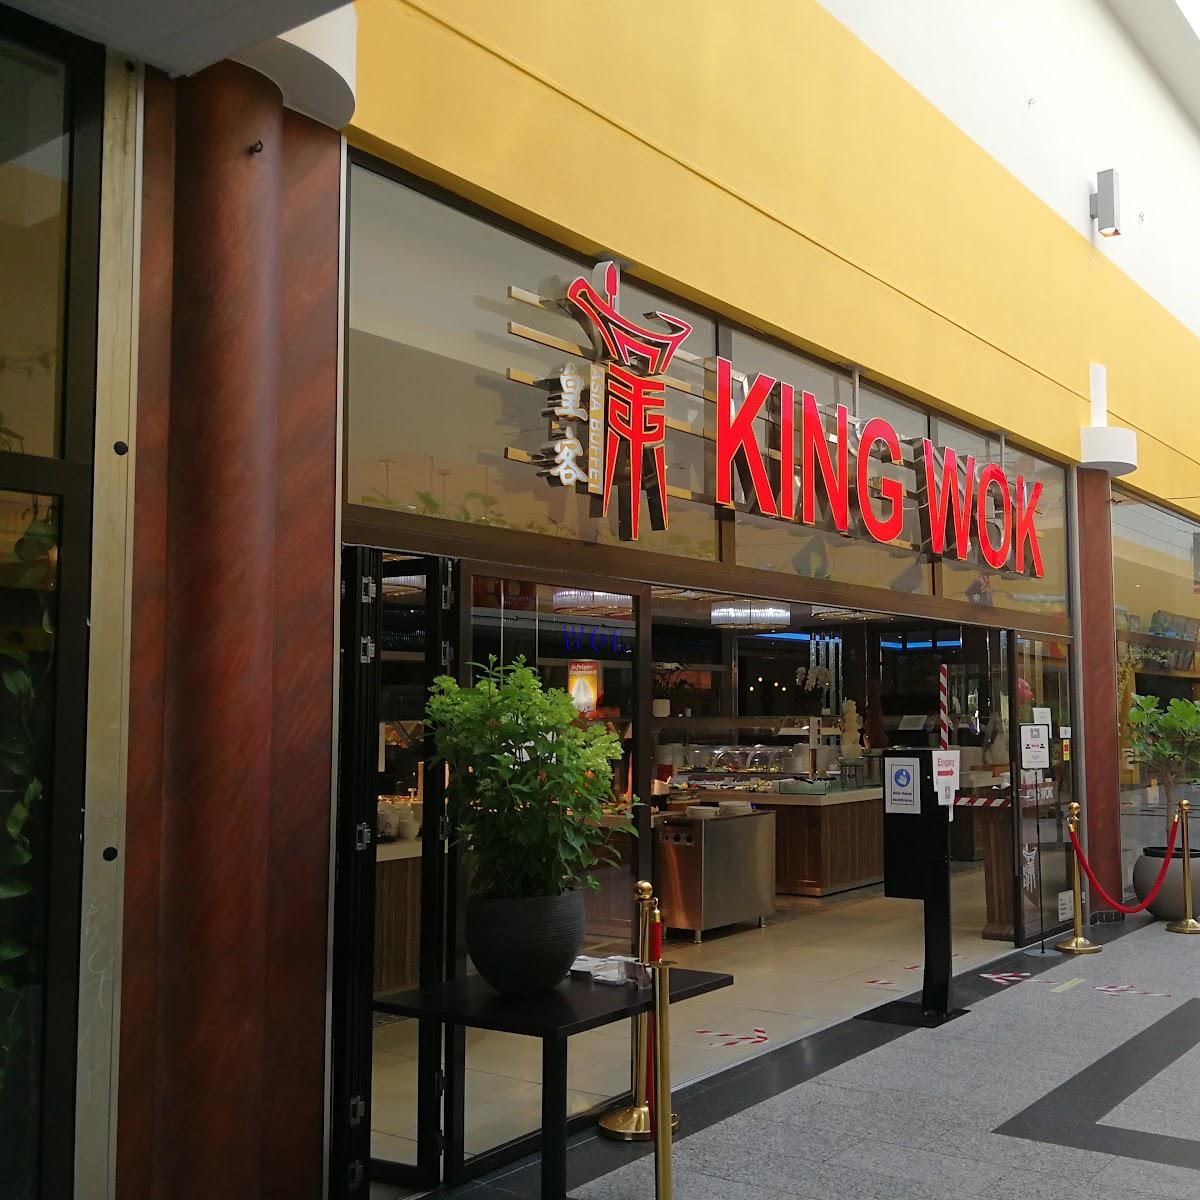 Restaurant "King Wok" in Berlin